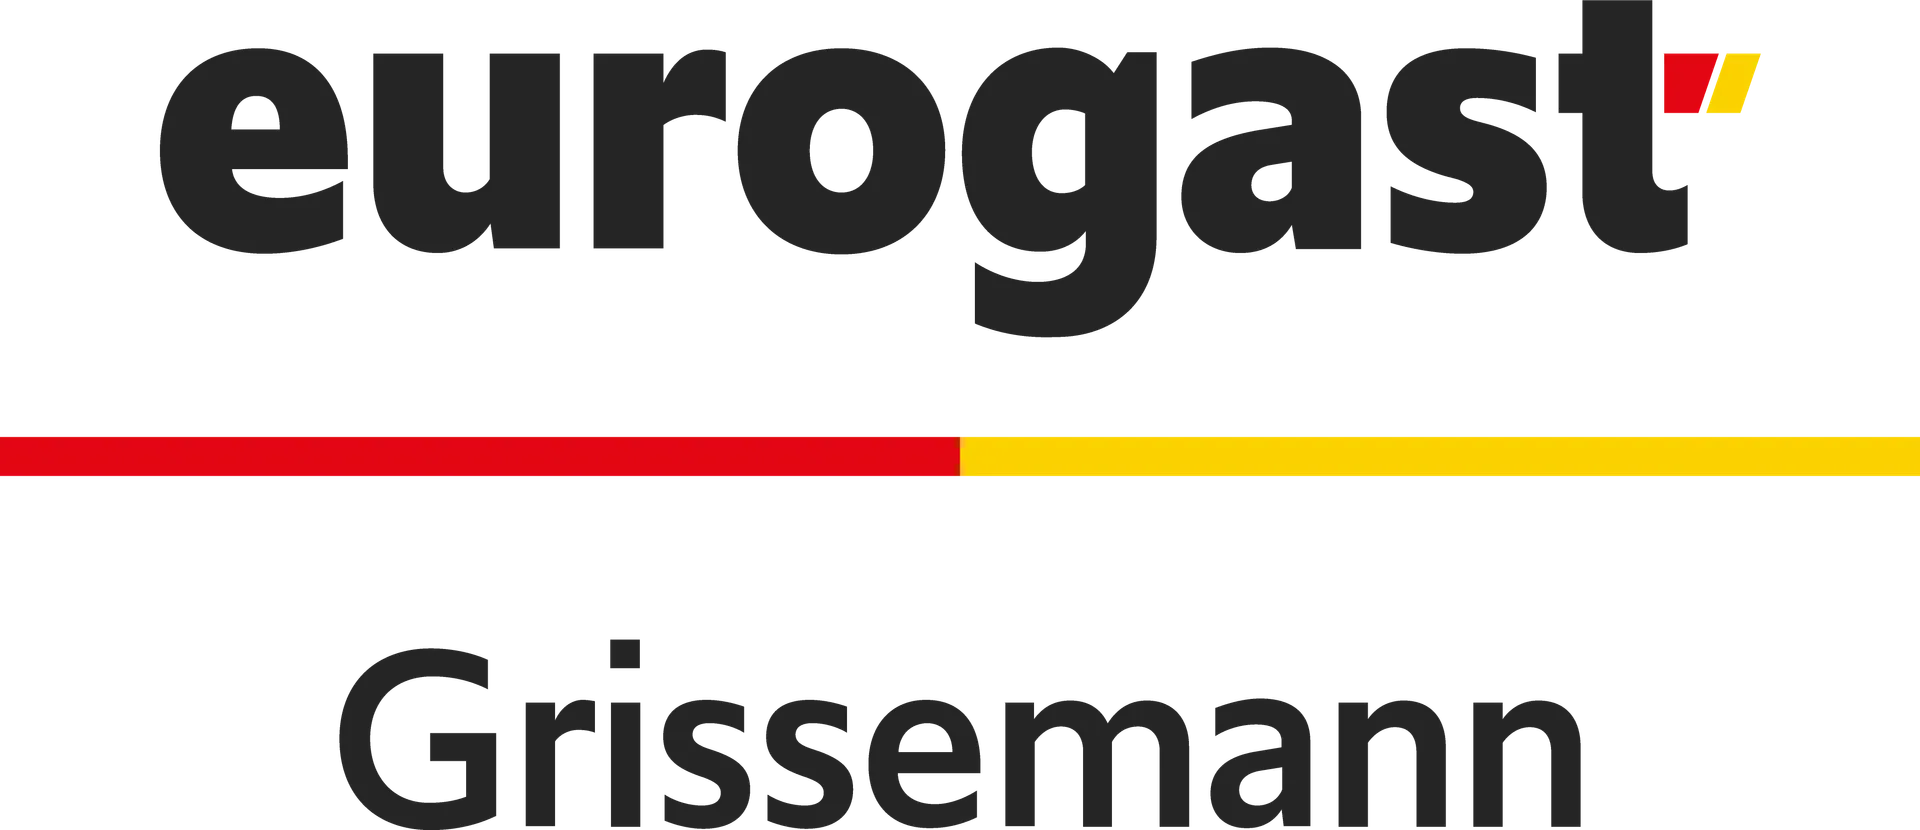 EUROGAST GRISSEMANN logo